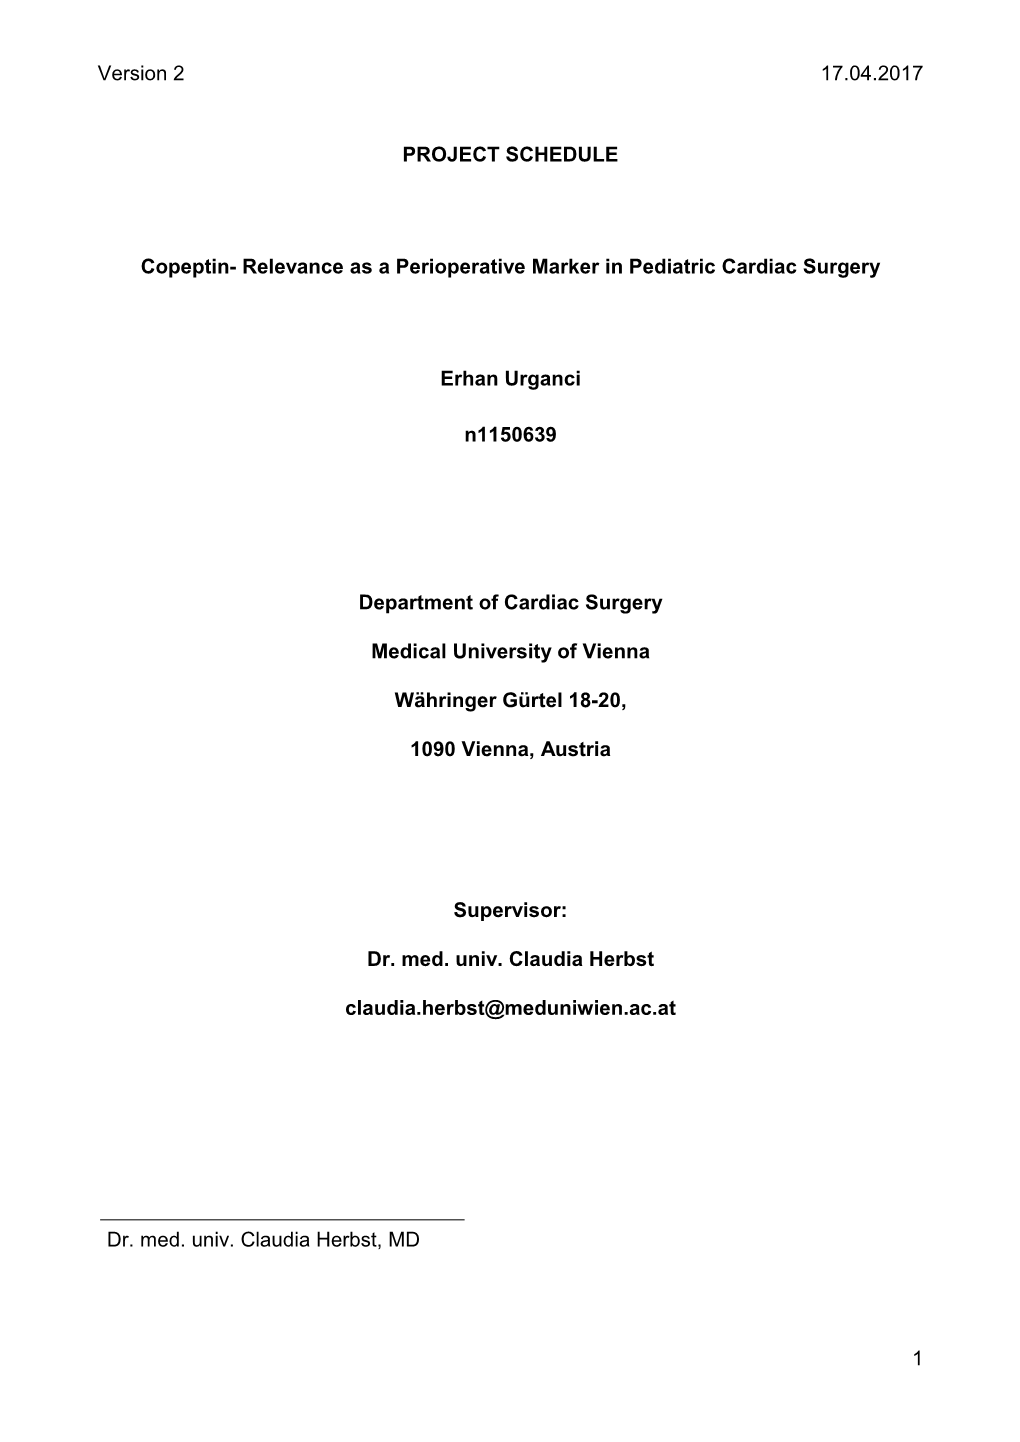 Relevance As a Perioperative Marker in Pediatric Cardiac Surgery